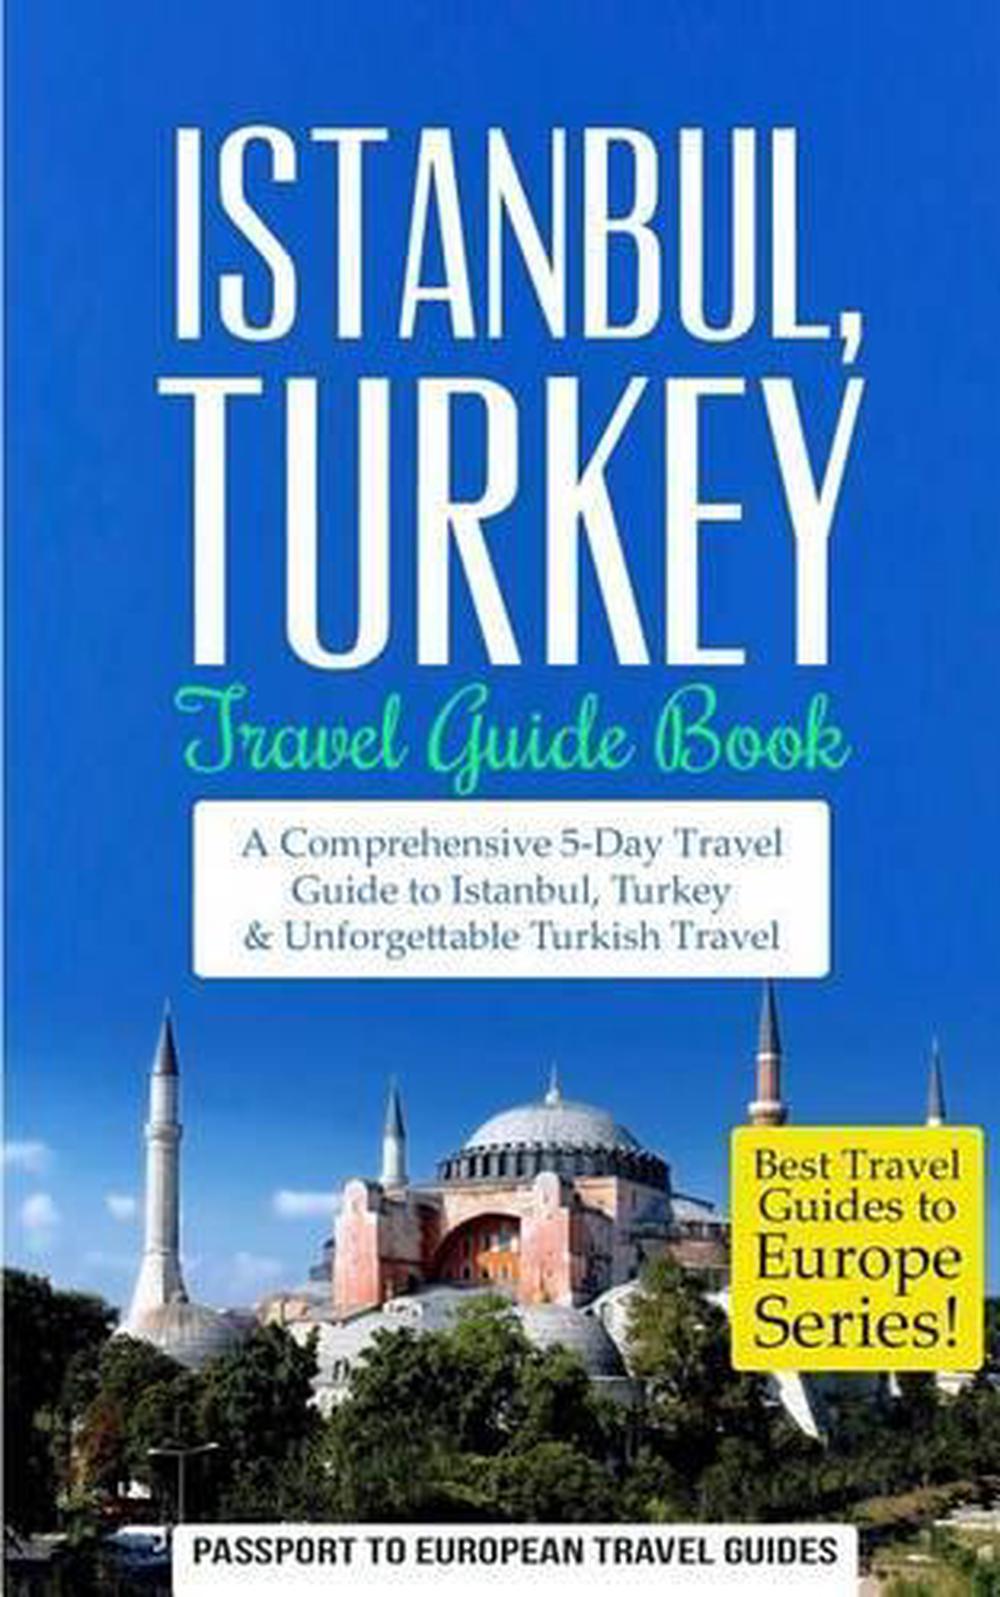 turkey tours guides